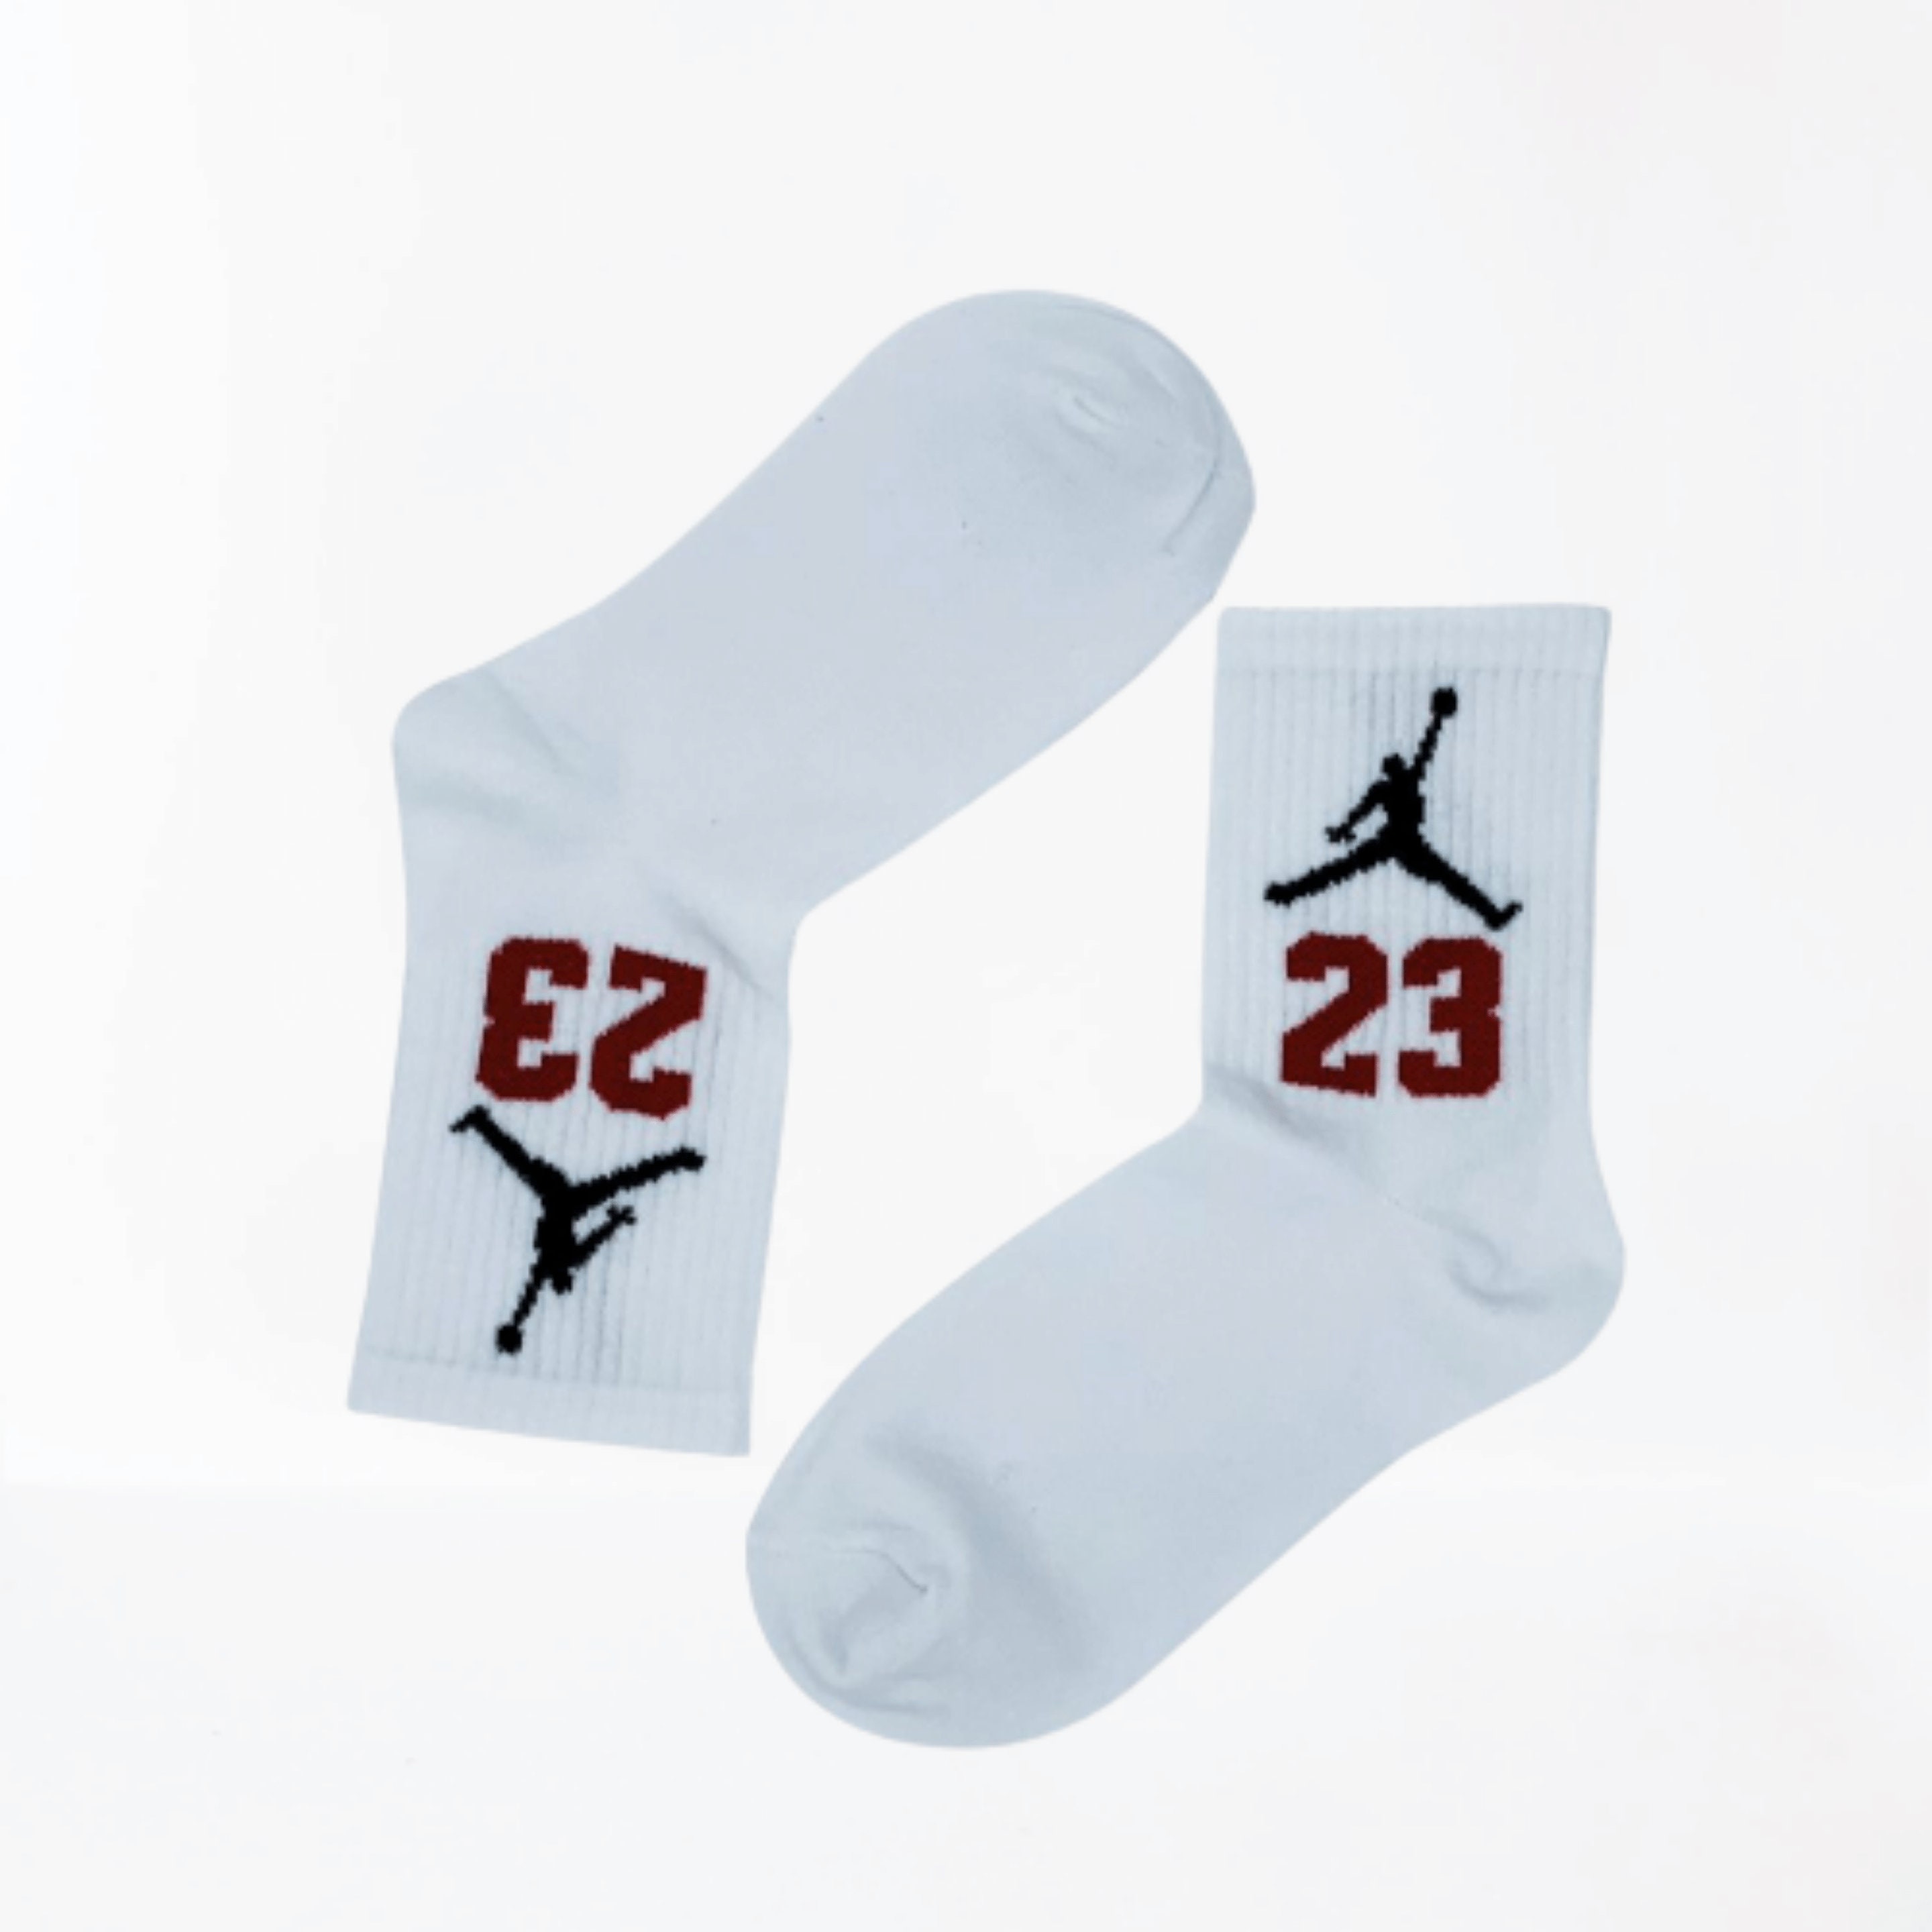 Air Jordan Designed Socks 23 Michael Jordan Basketball | Etsy